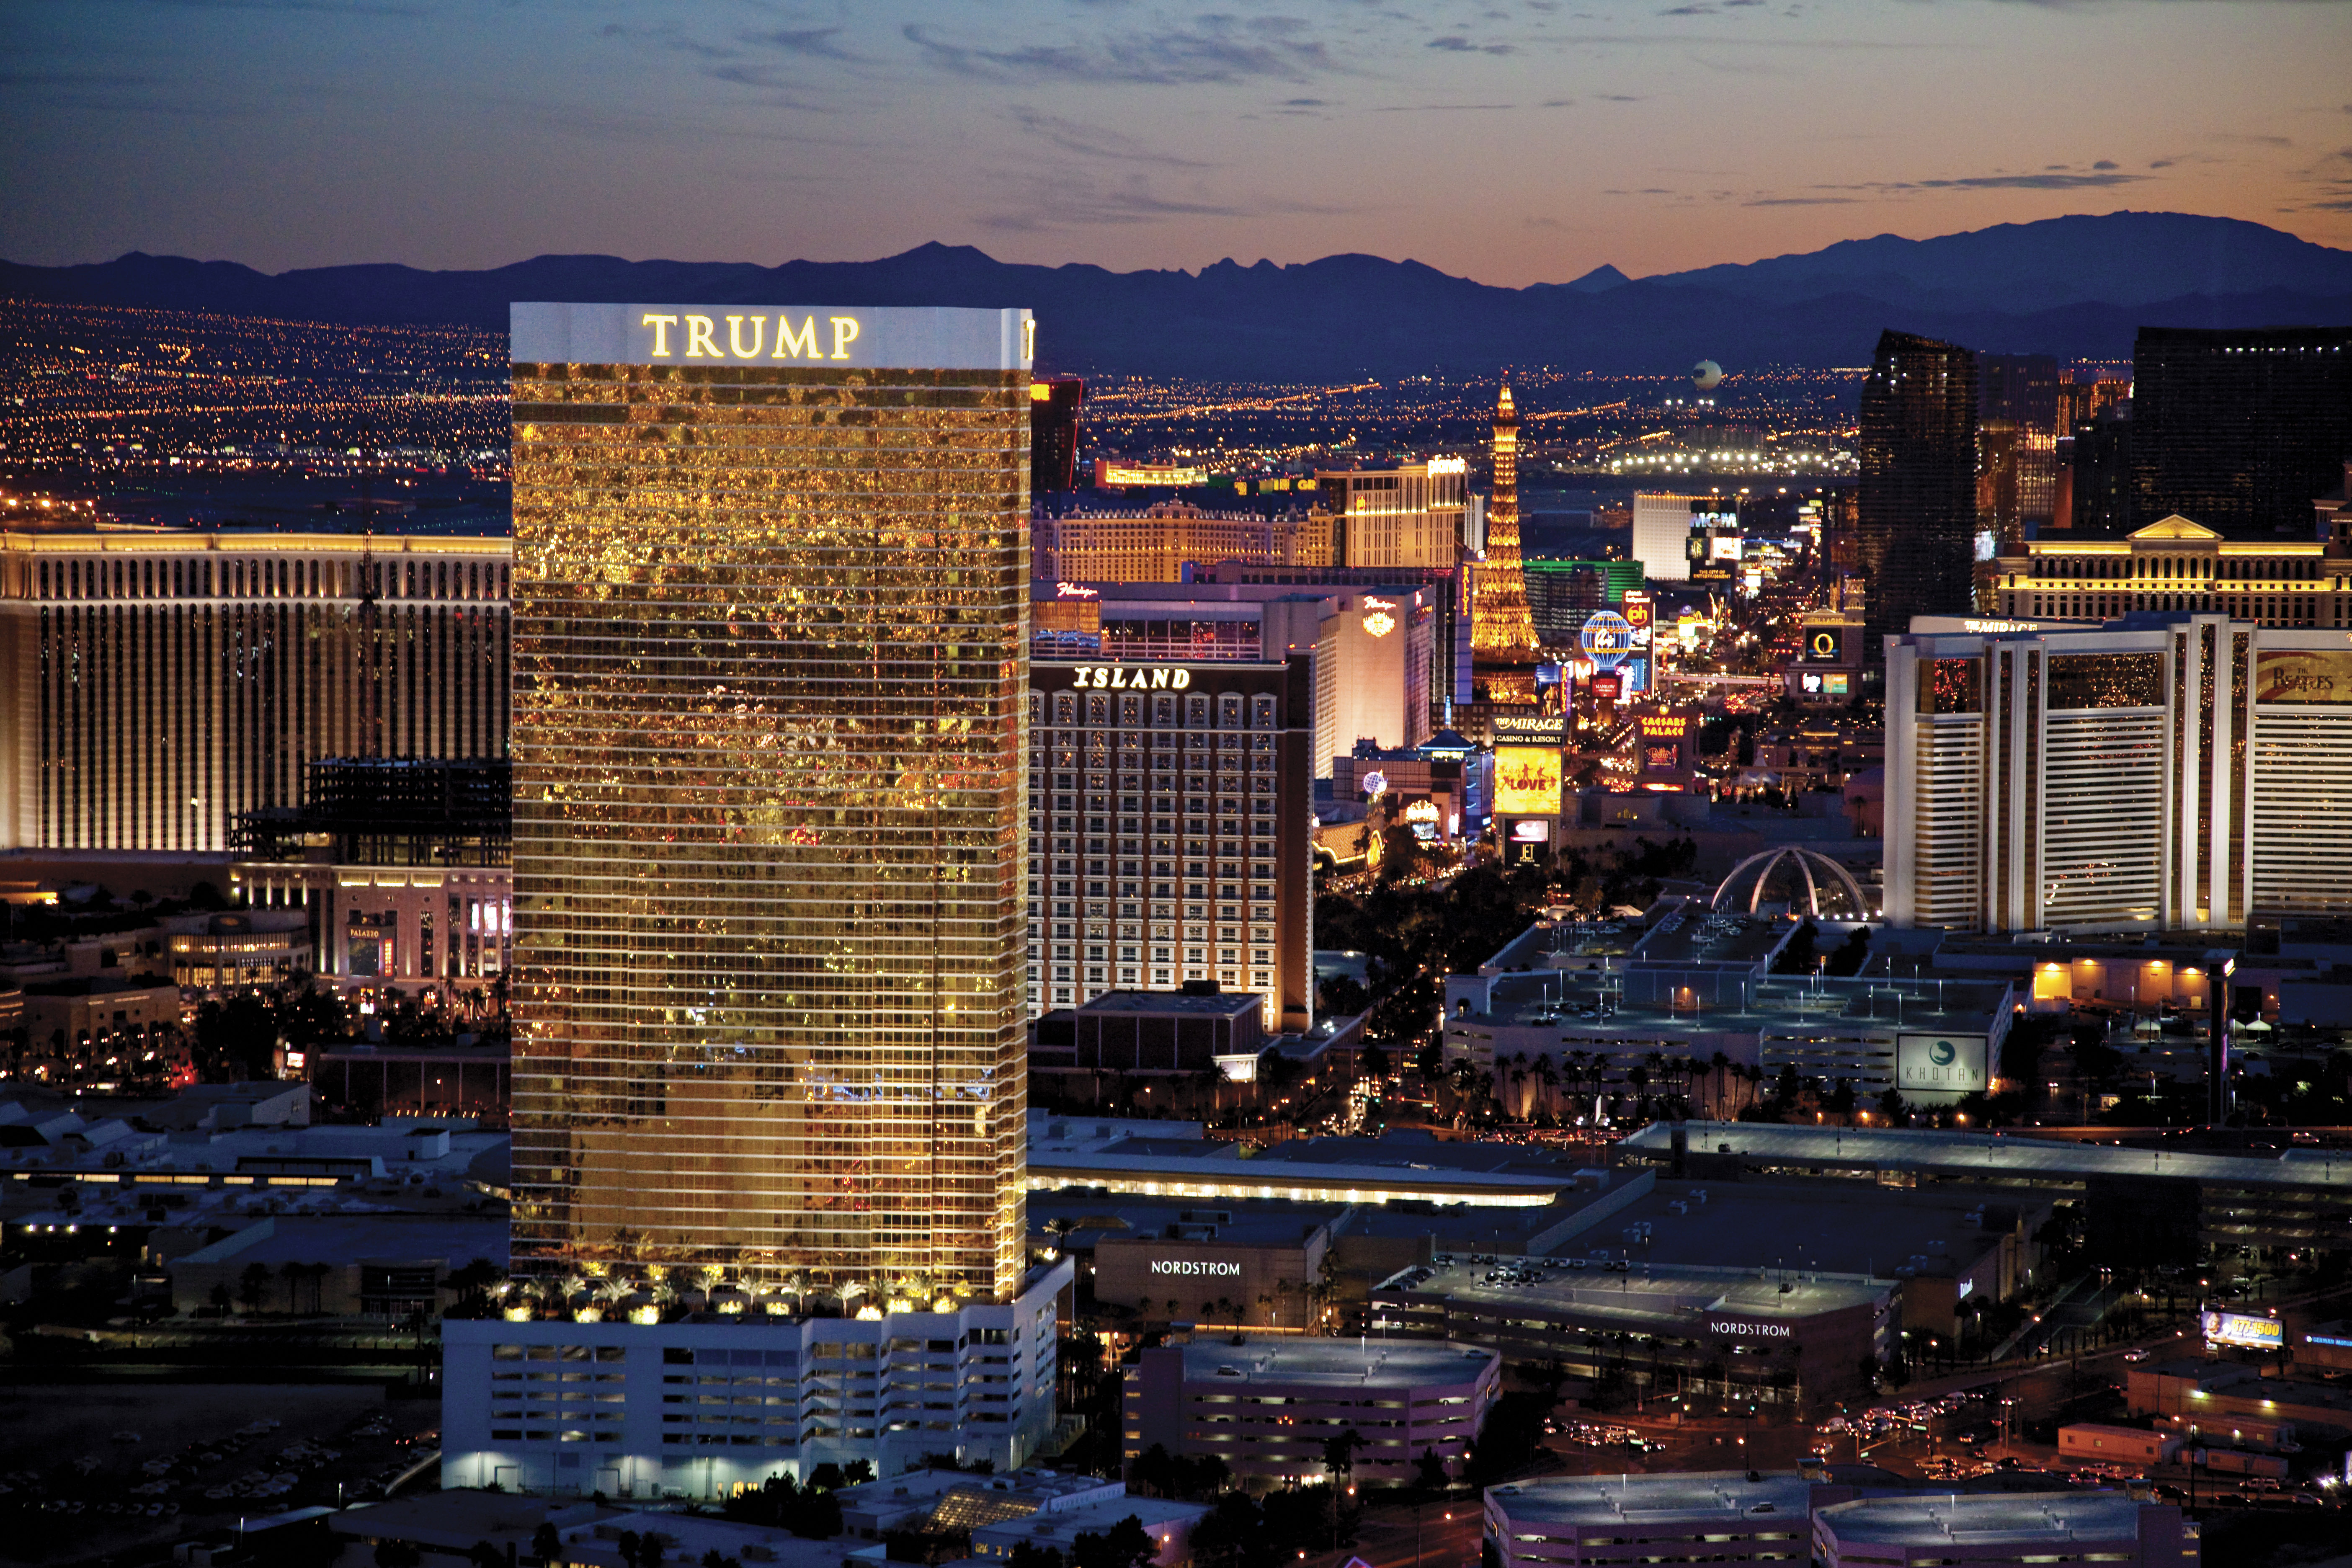 Trump International Hotel Hotel Tower Las Vegas Nv